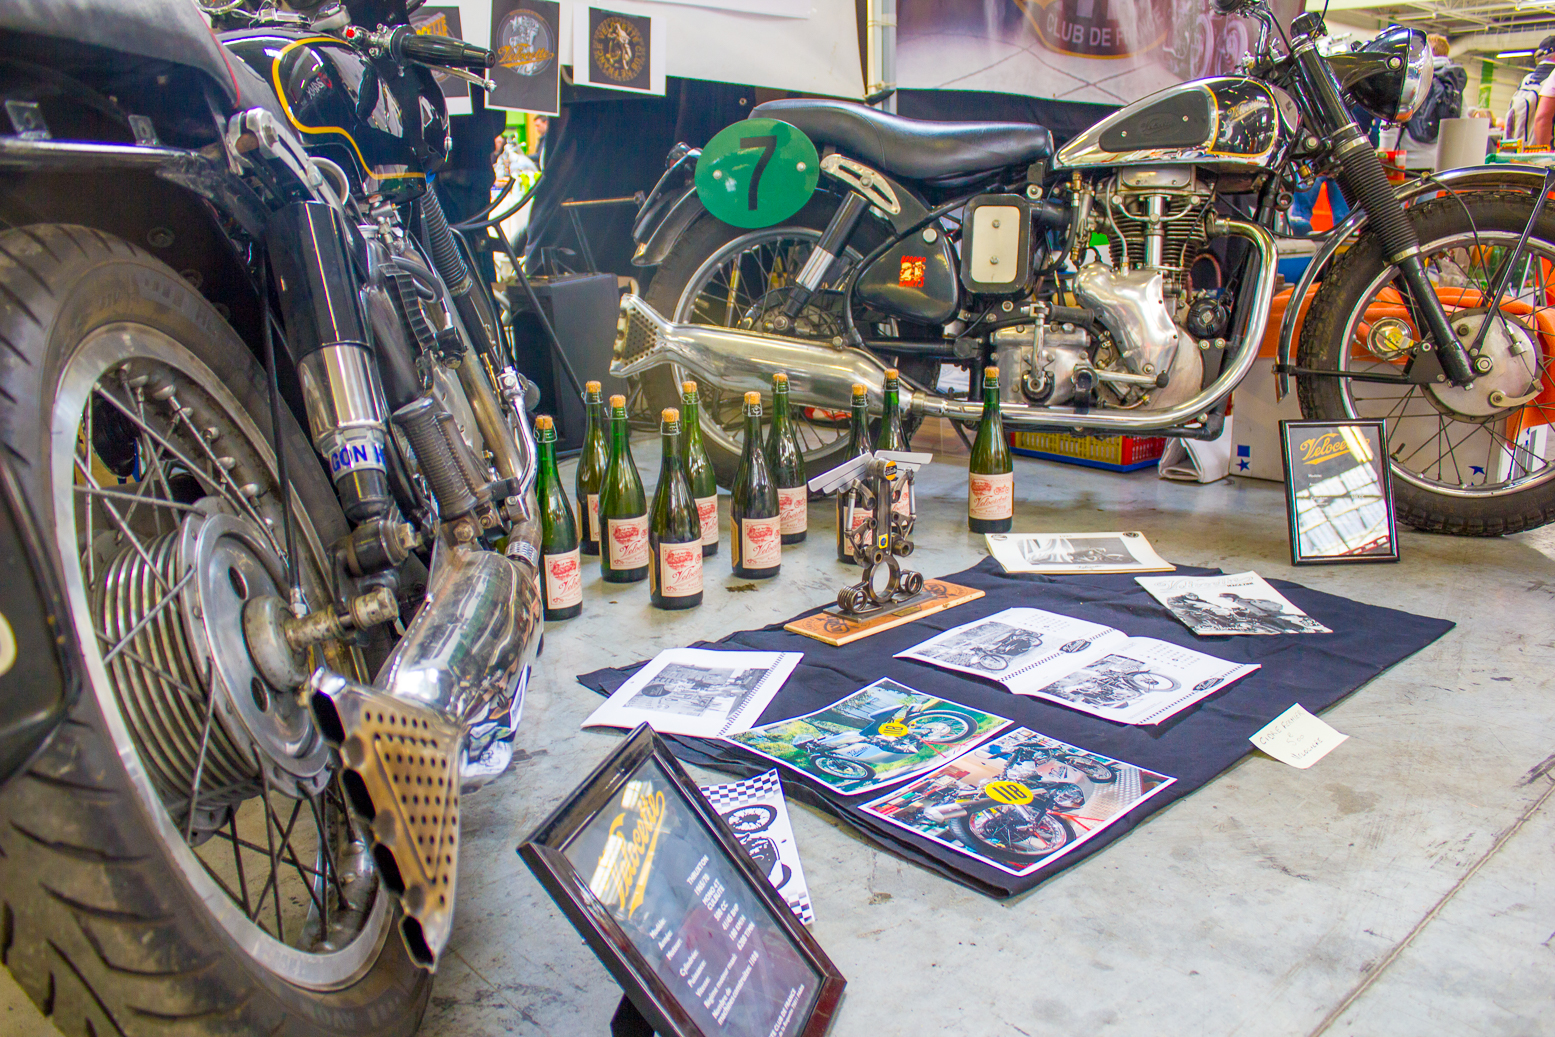 Motorama 2016 : Les motos The Vincent